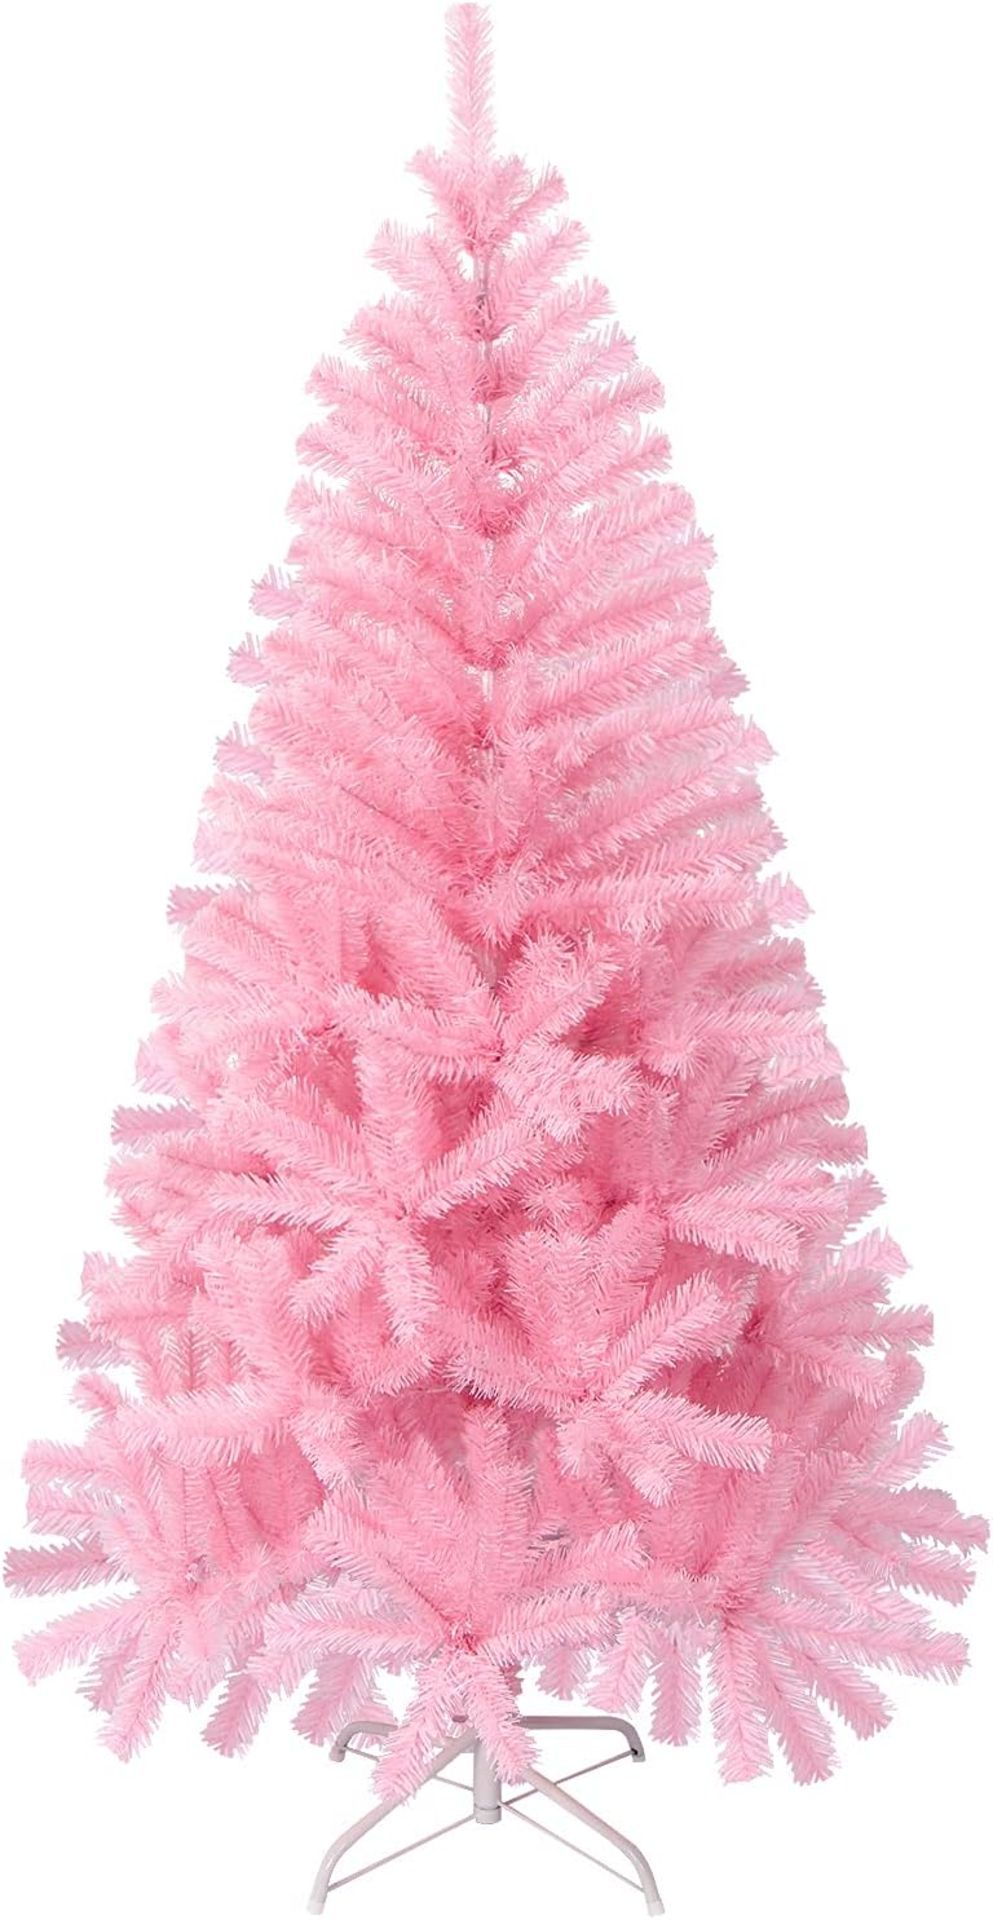 TRADE LOT 12 x Brand New Premium Lokipa pink 5ft christmas tree - 450 tips apw - Image 2 of 2